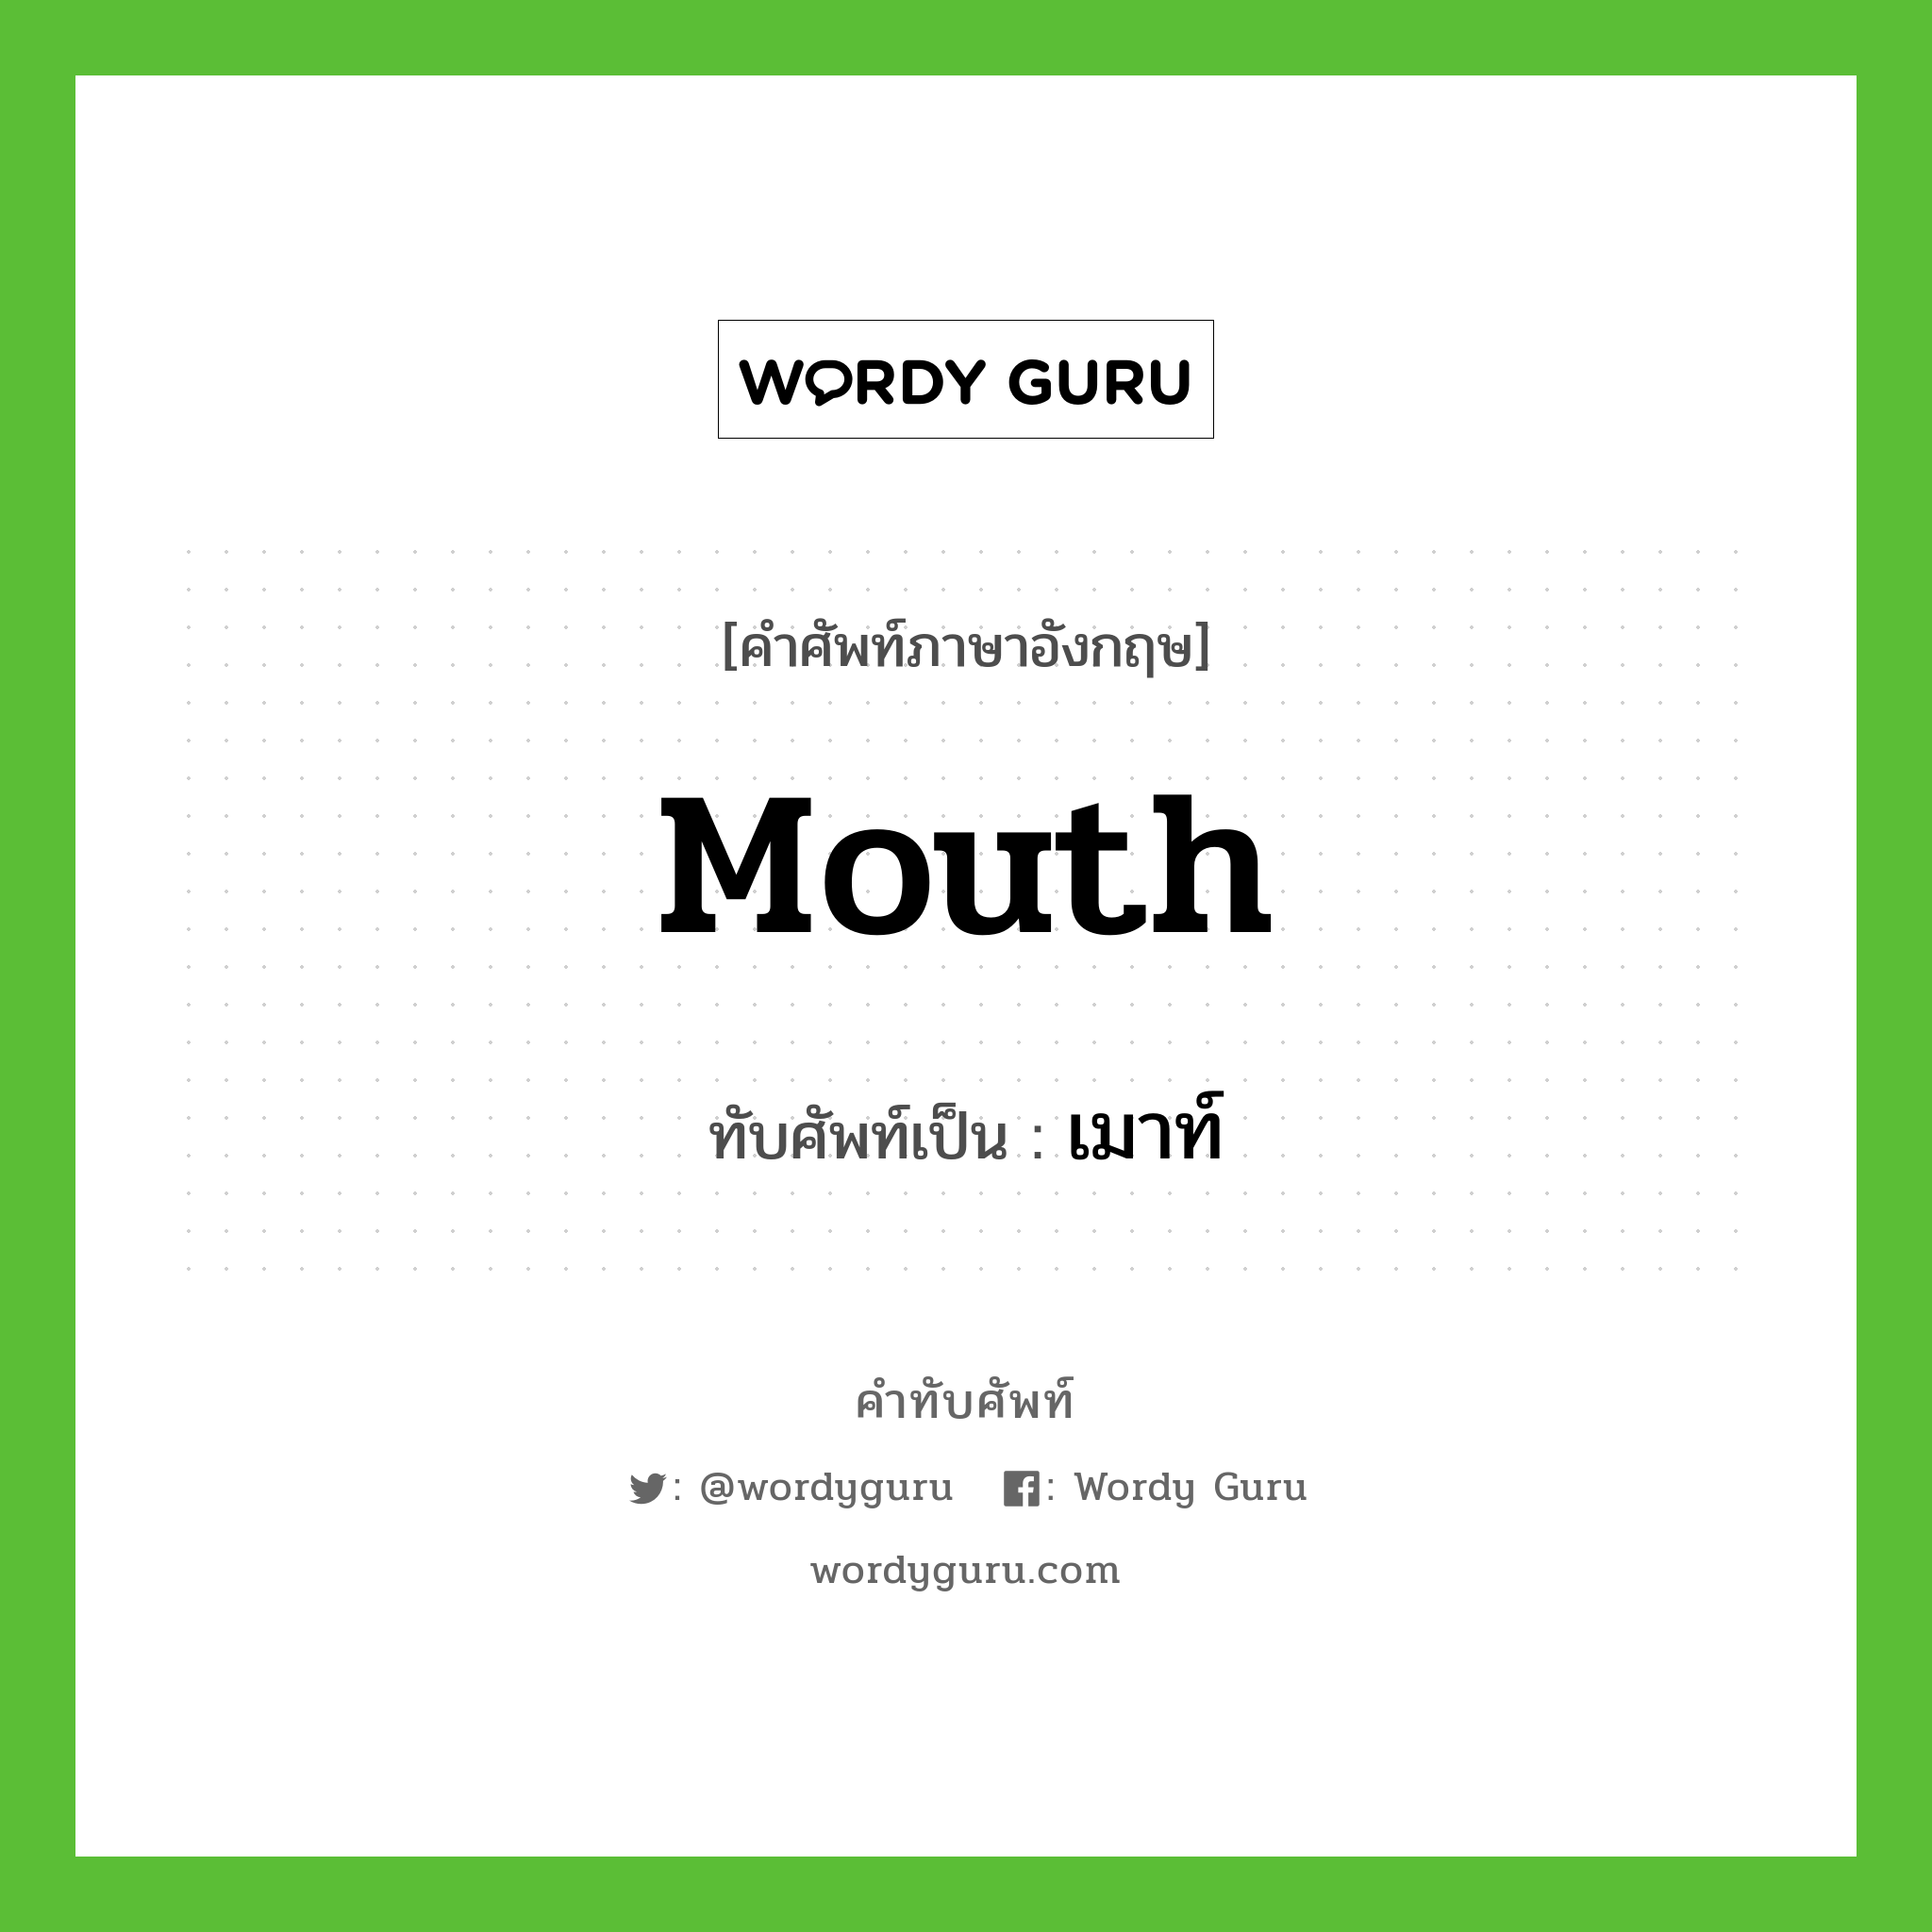 mouth เขียนเป็นคำไทยว่าอะไร?, คำศัพท์ภาษาอังกฤษ mouth ทับศัพท์เป็น เมาท์